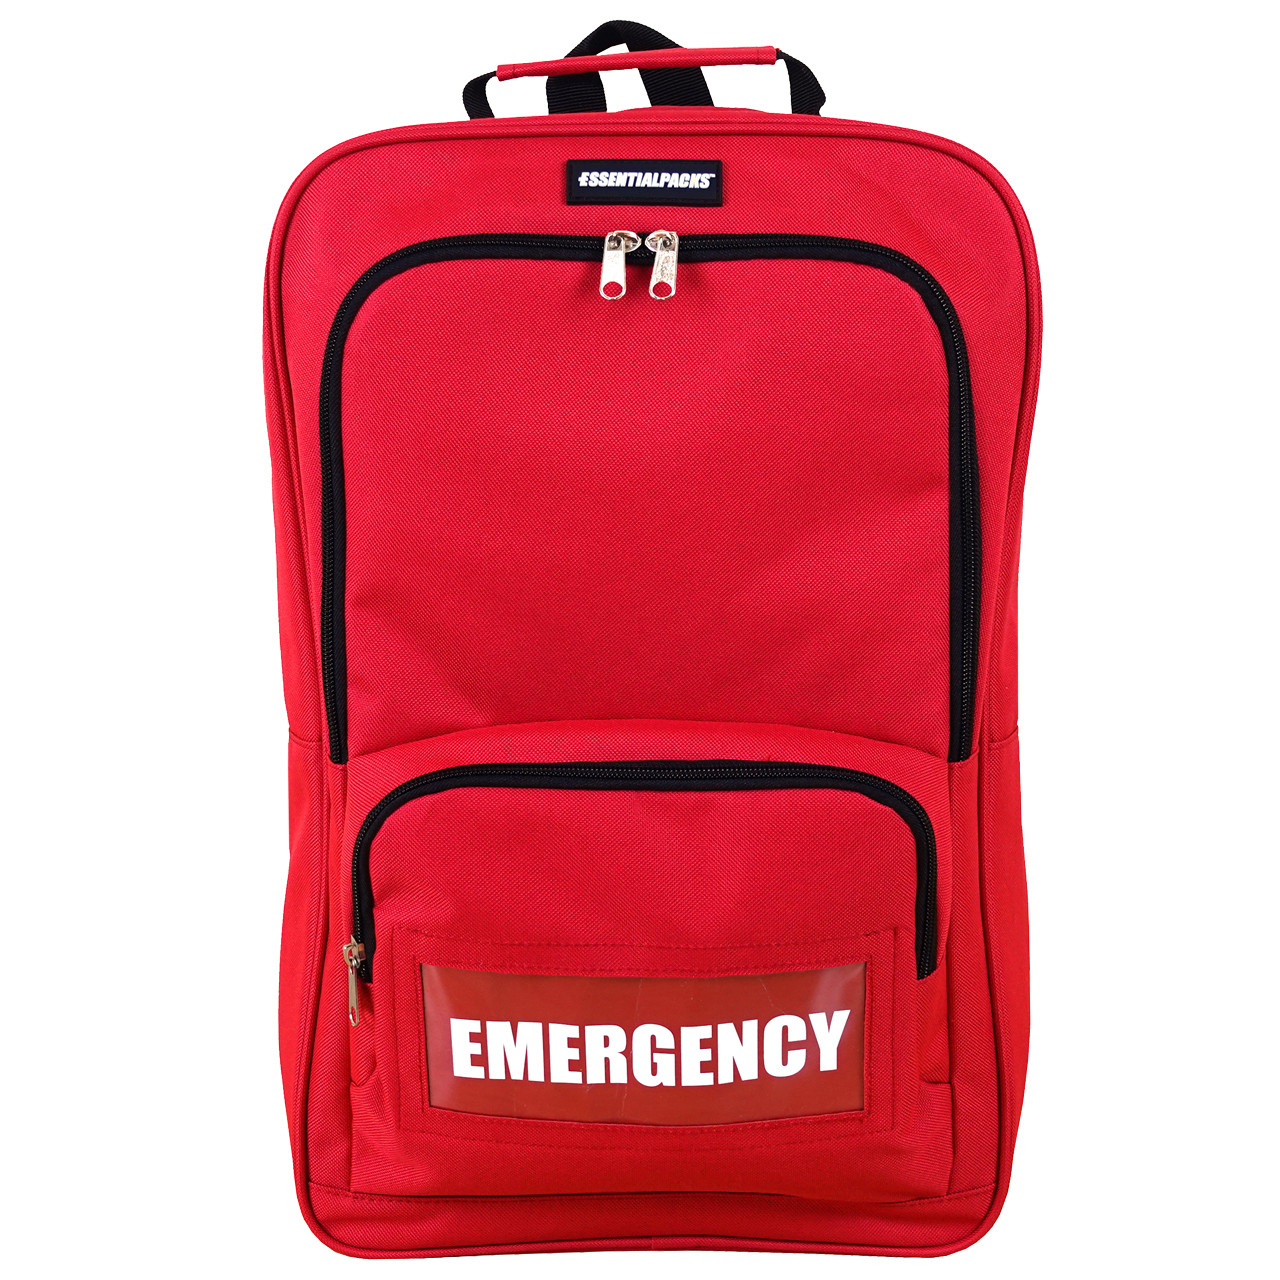 Standard Emergency Backpack